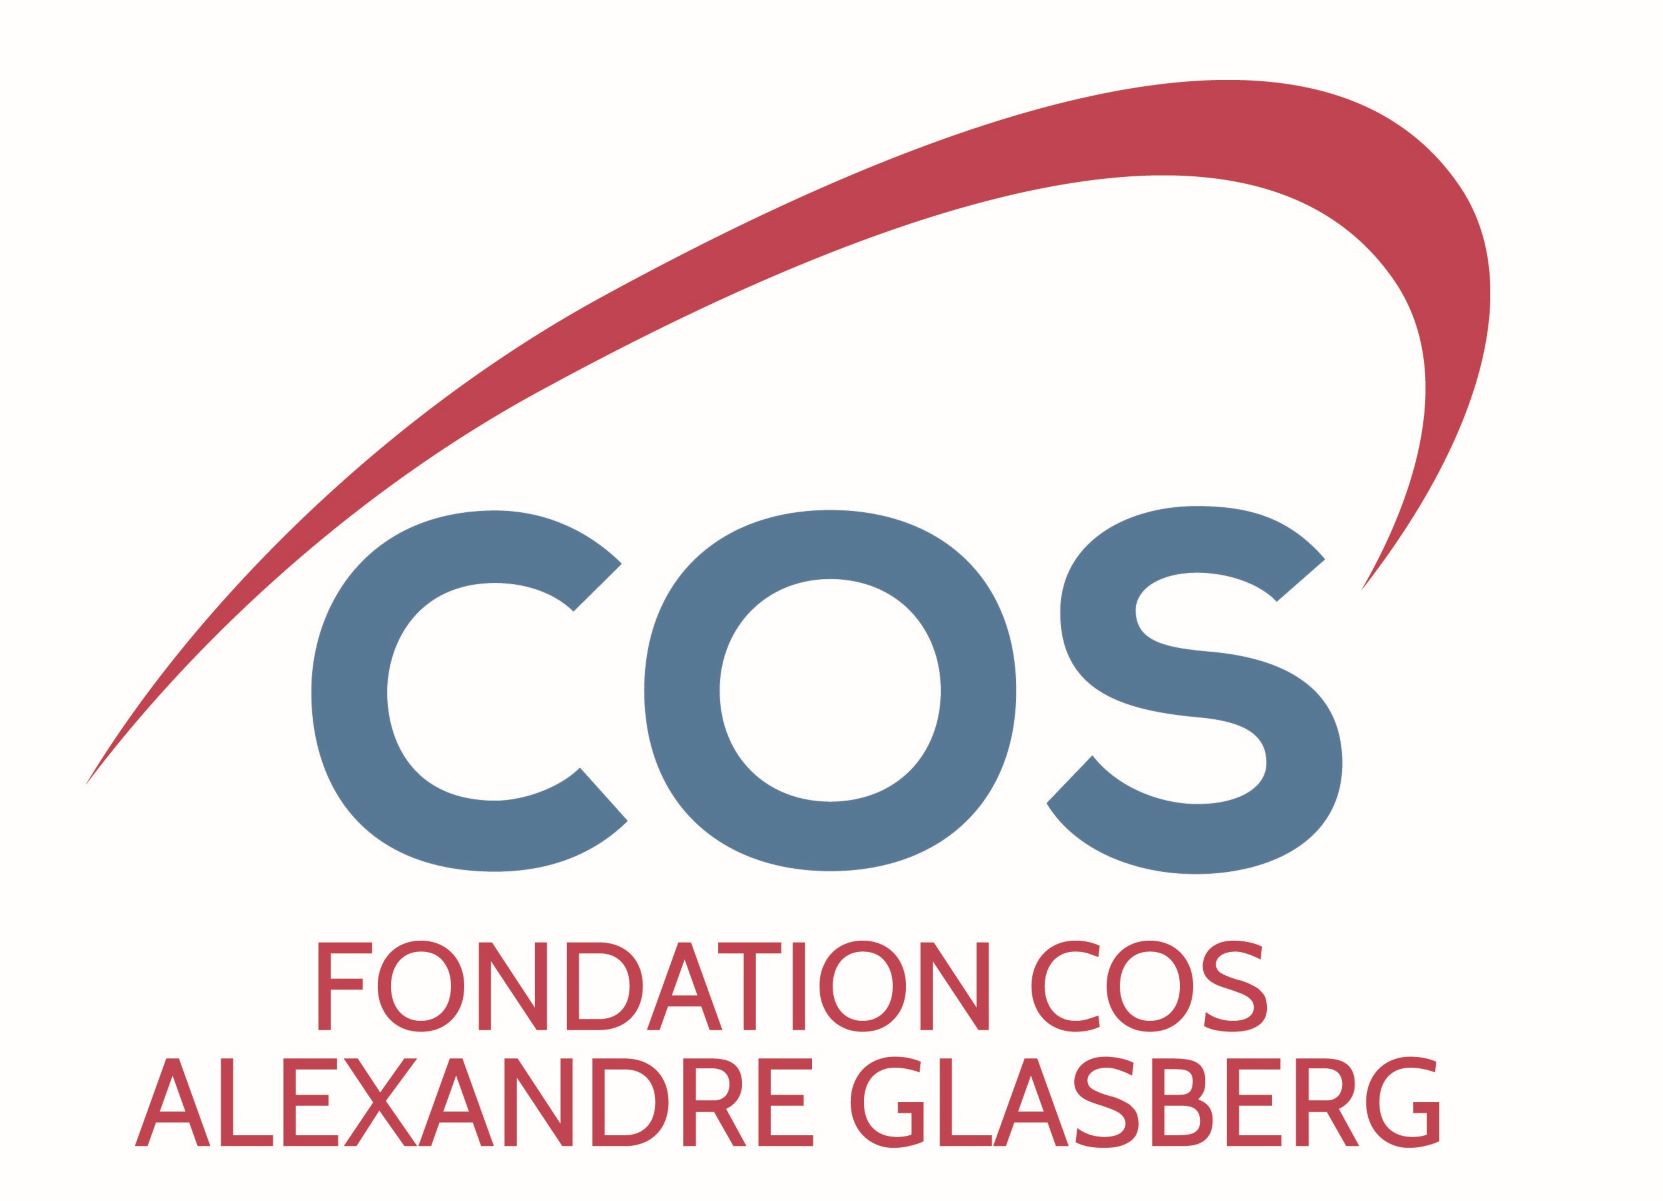 Fondation COS Alexandre Glasberg